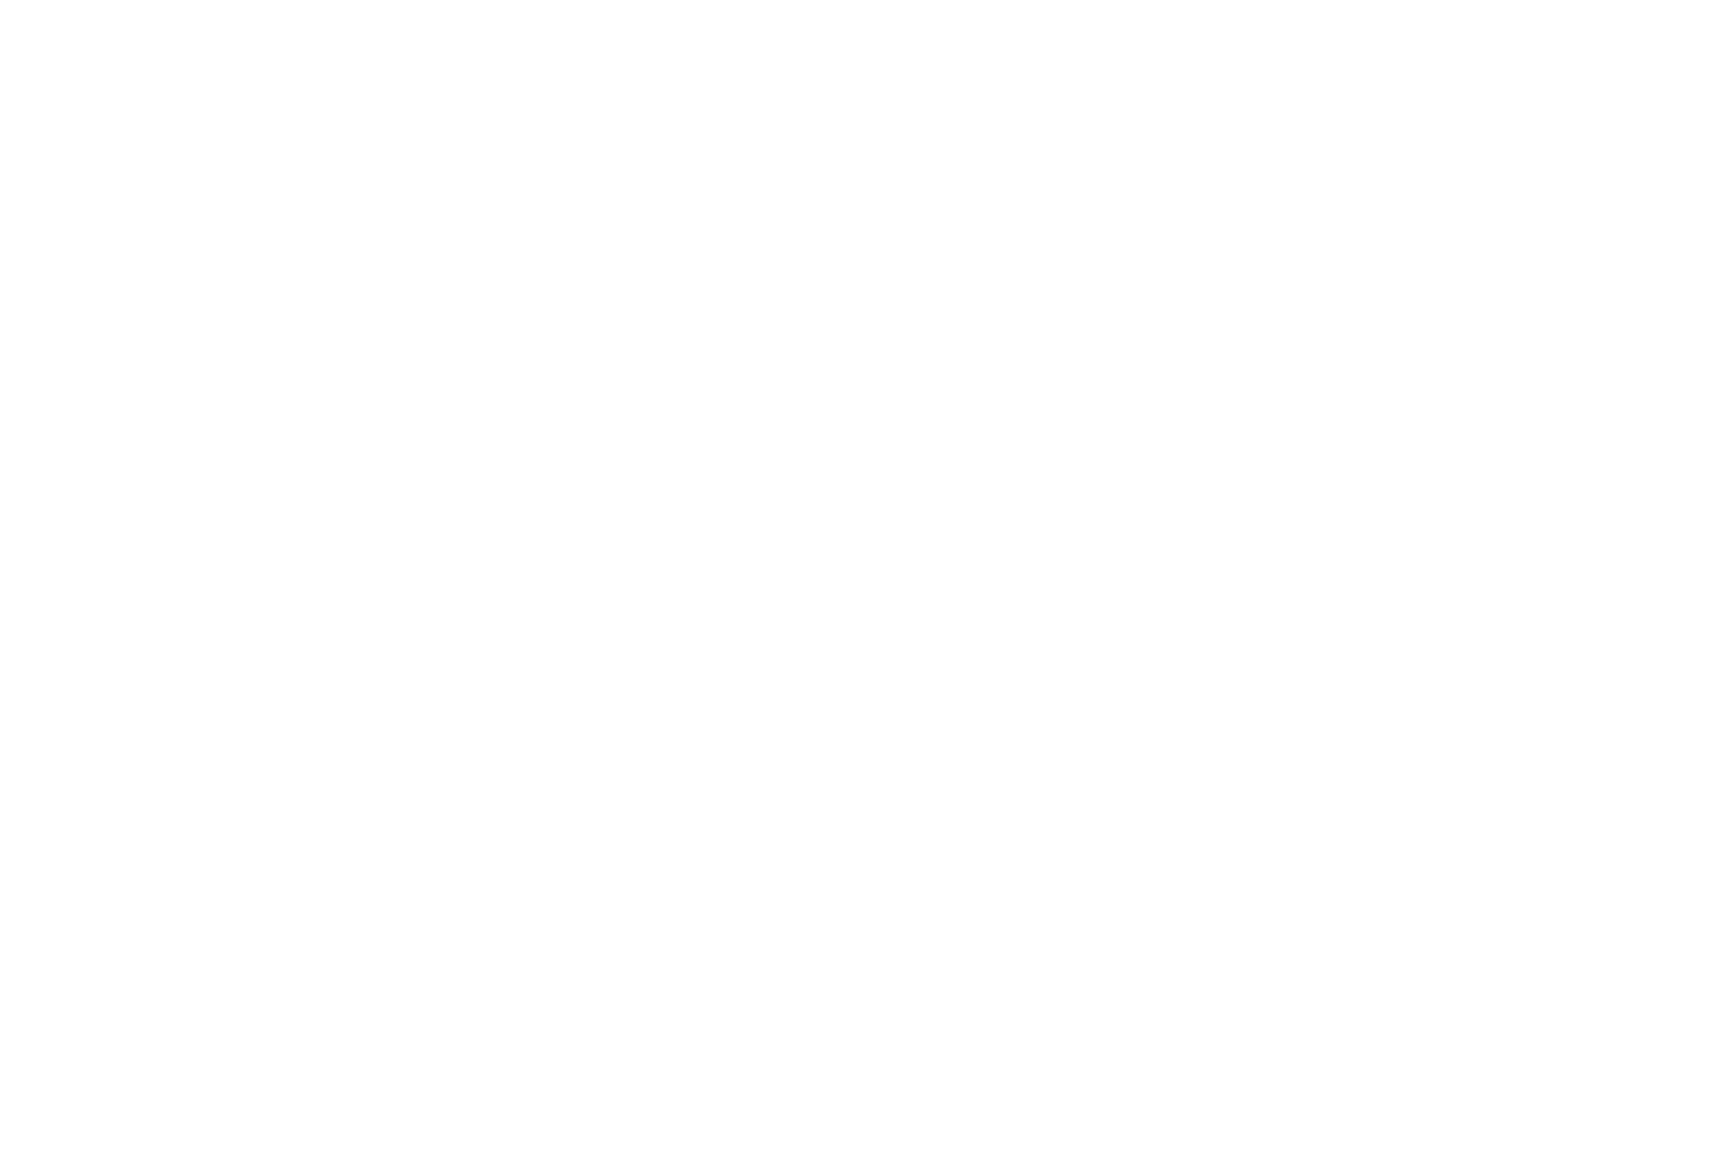 Best Foreign-Language Short - Indie Short Fest - 2024(1)